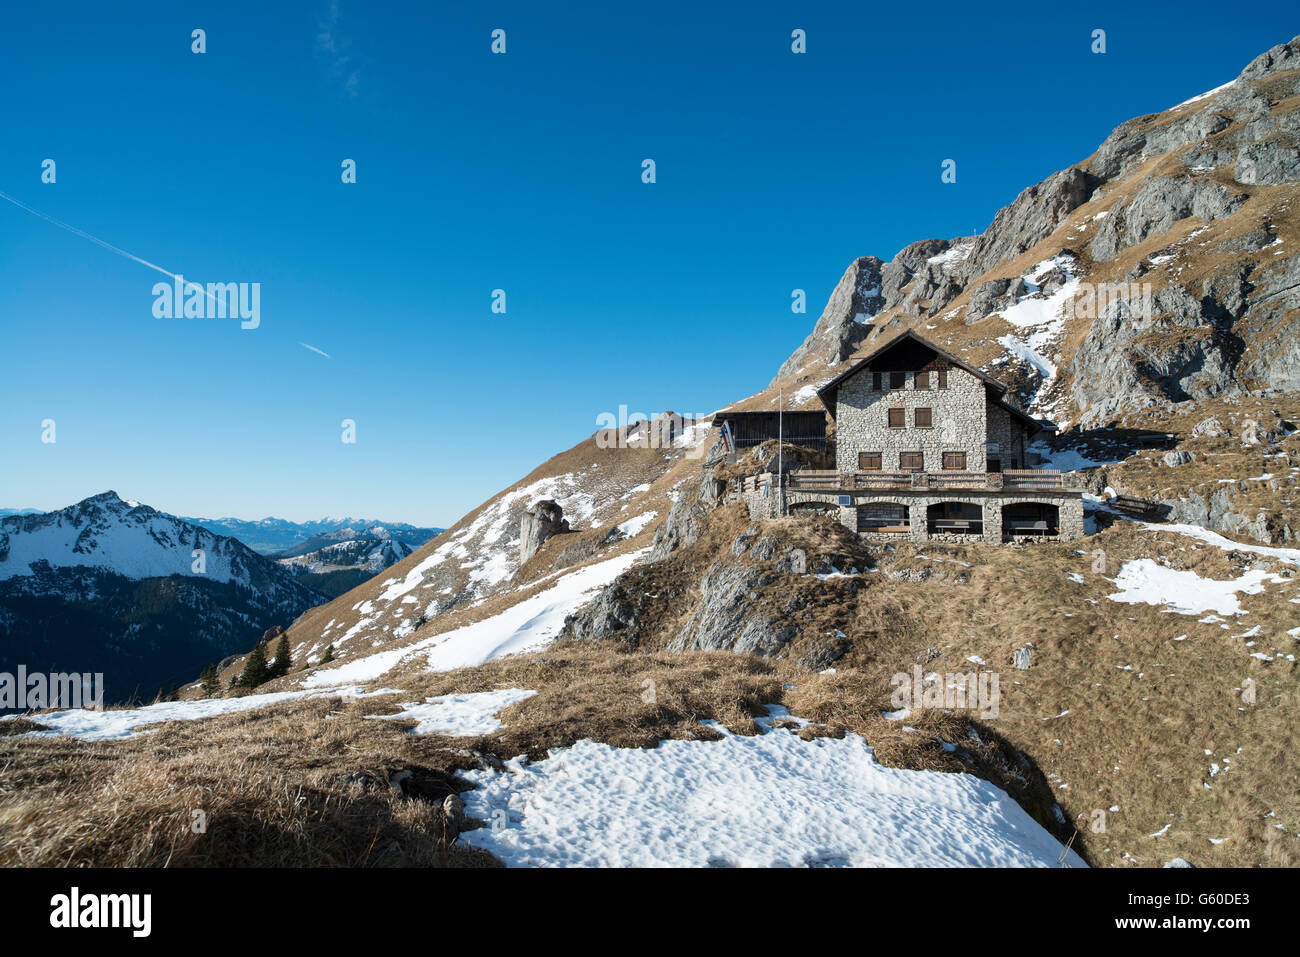 Die Bad Kissinger Hütte am Südwesthang des Aggensteins Bad Kissinger Hut in wintertime, Allgäu Alps, Tannheim Mountains, Pfronten Stock Photo